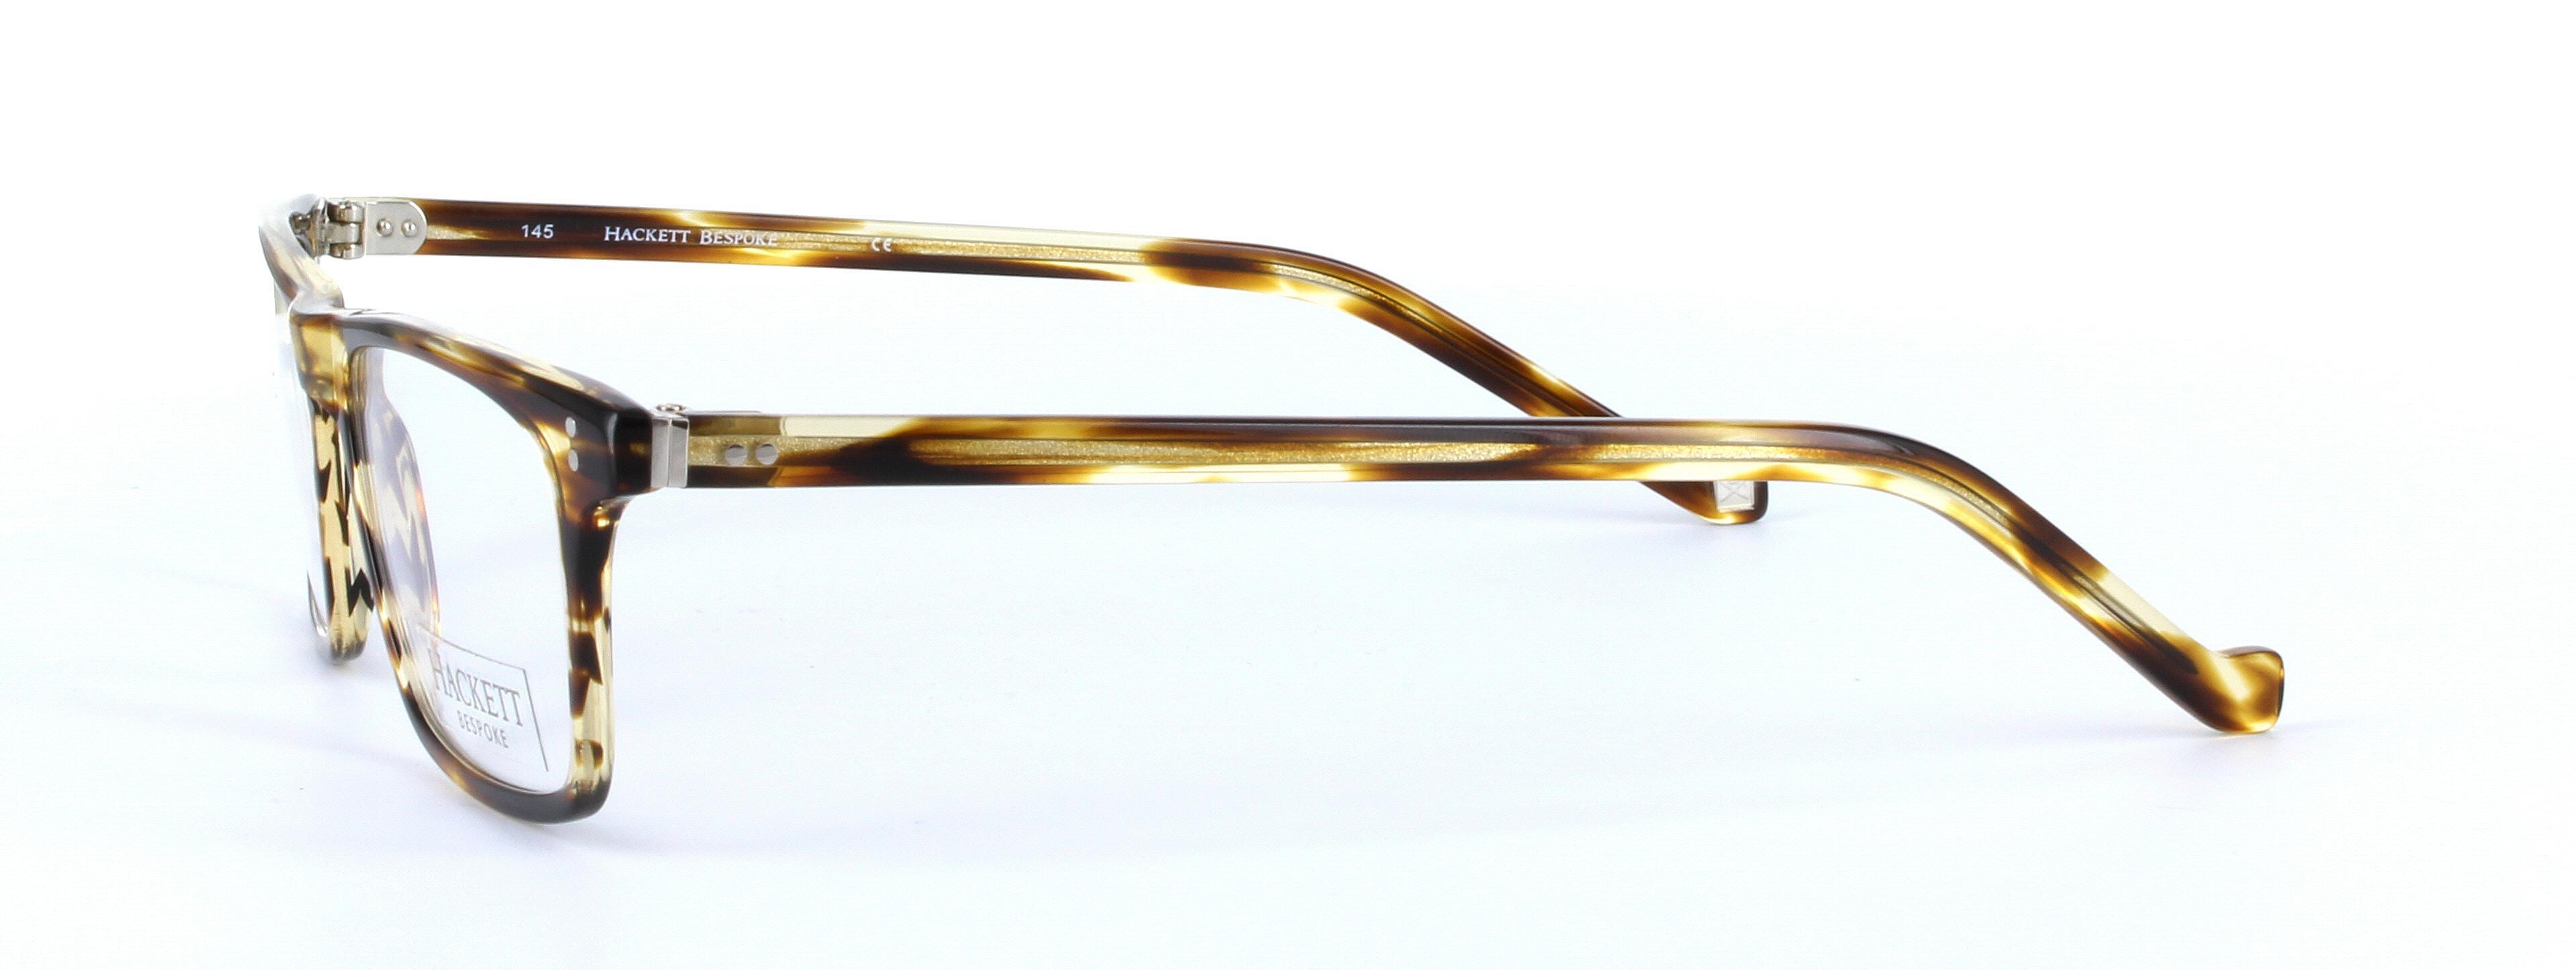 HACKETT BESPOKE (HEB142-192) Brown Full Rim Oval Rectangular Acetate Glasses - Image View 2